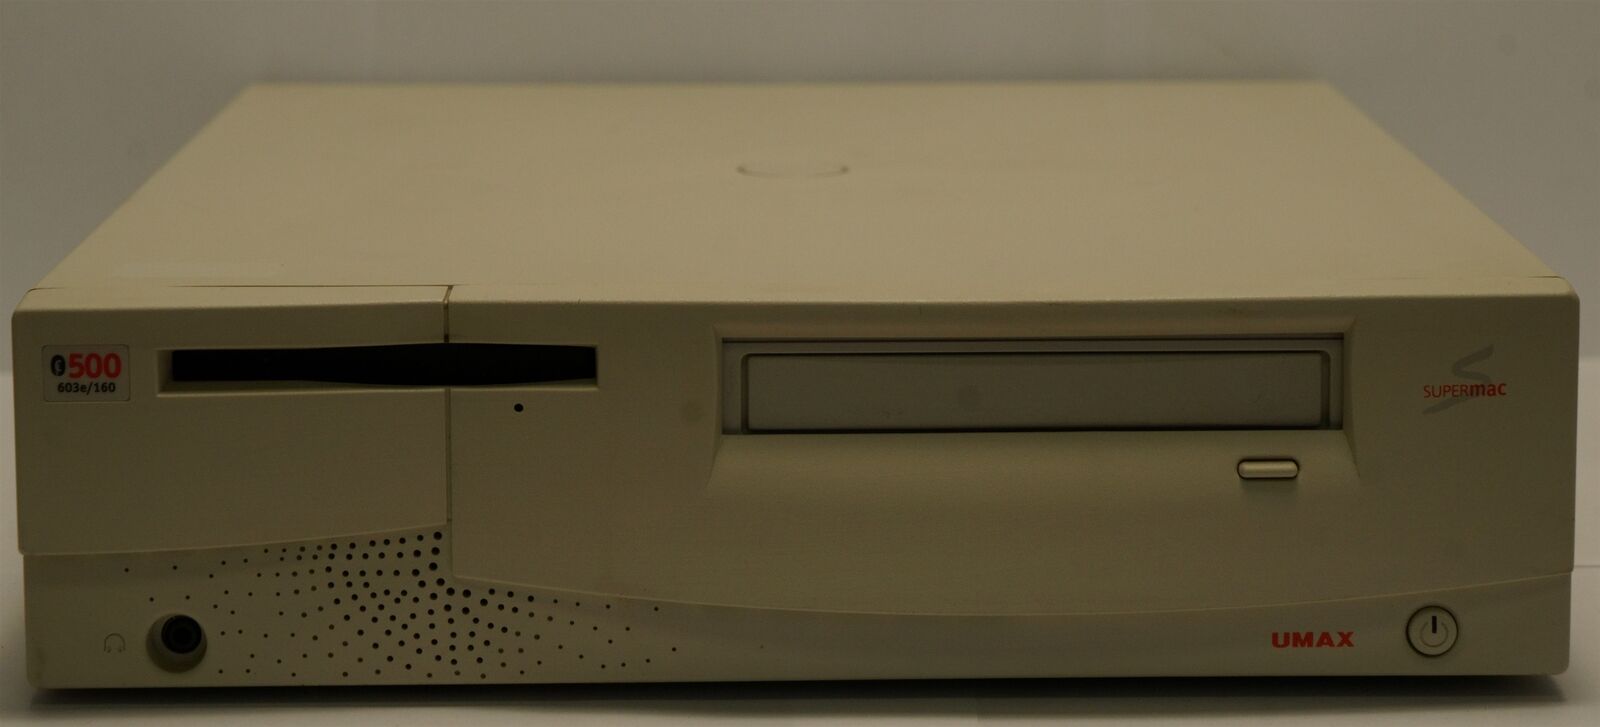 UMAX SuperMac C500 603e/160 Model SN2000 , Mac Clone 7.5.5- Tested and Running 